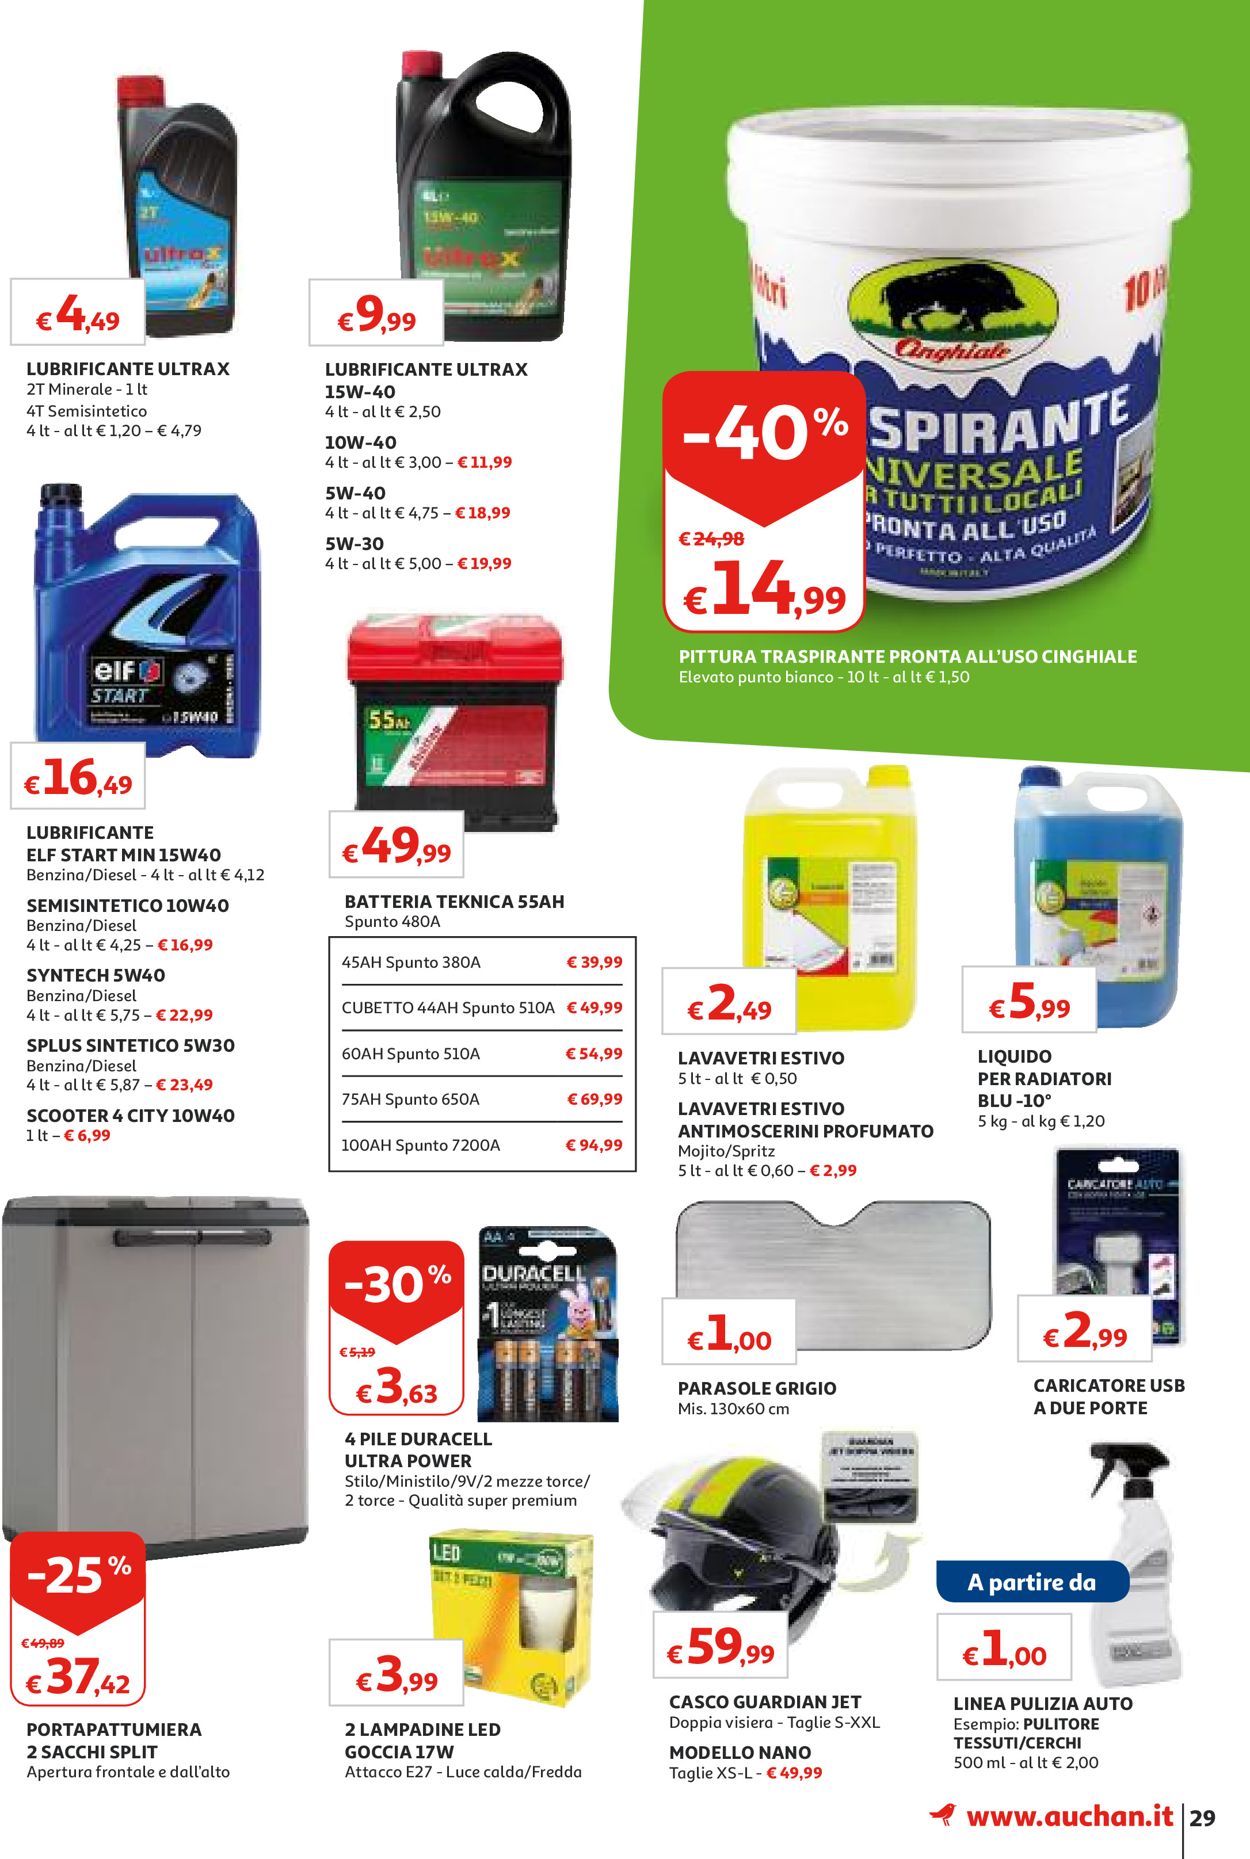 Volantino Auchan - Offerte 23/05-30/05/2019 (Pagina 29)